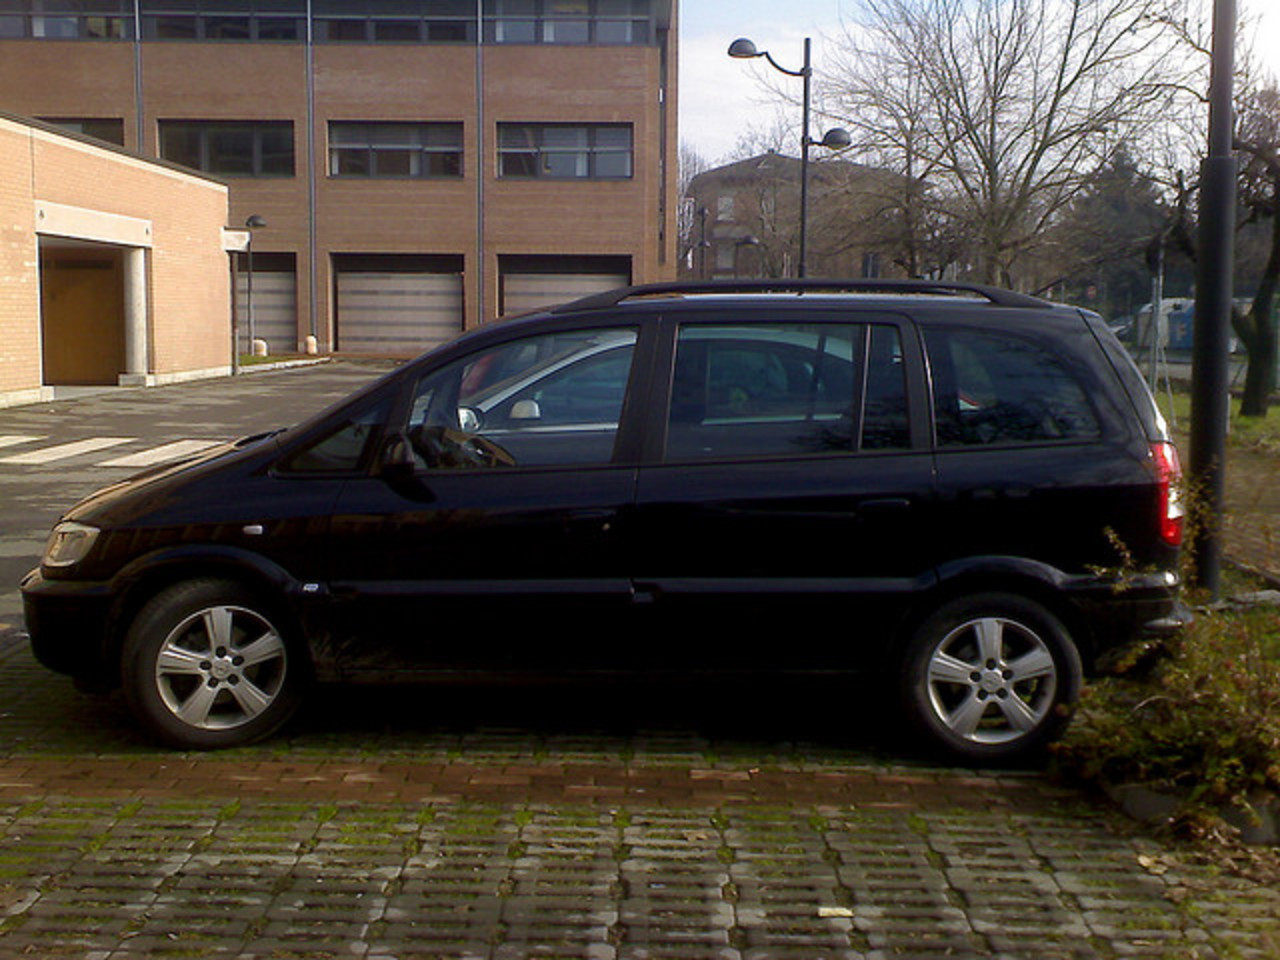 Opel Zafira | Flickr - Photo Sharing!